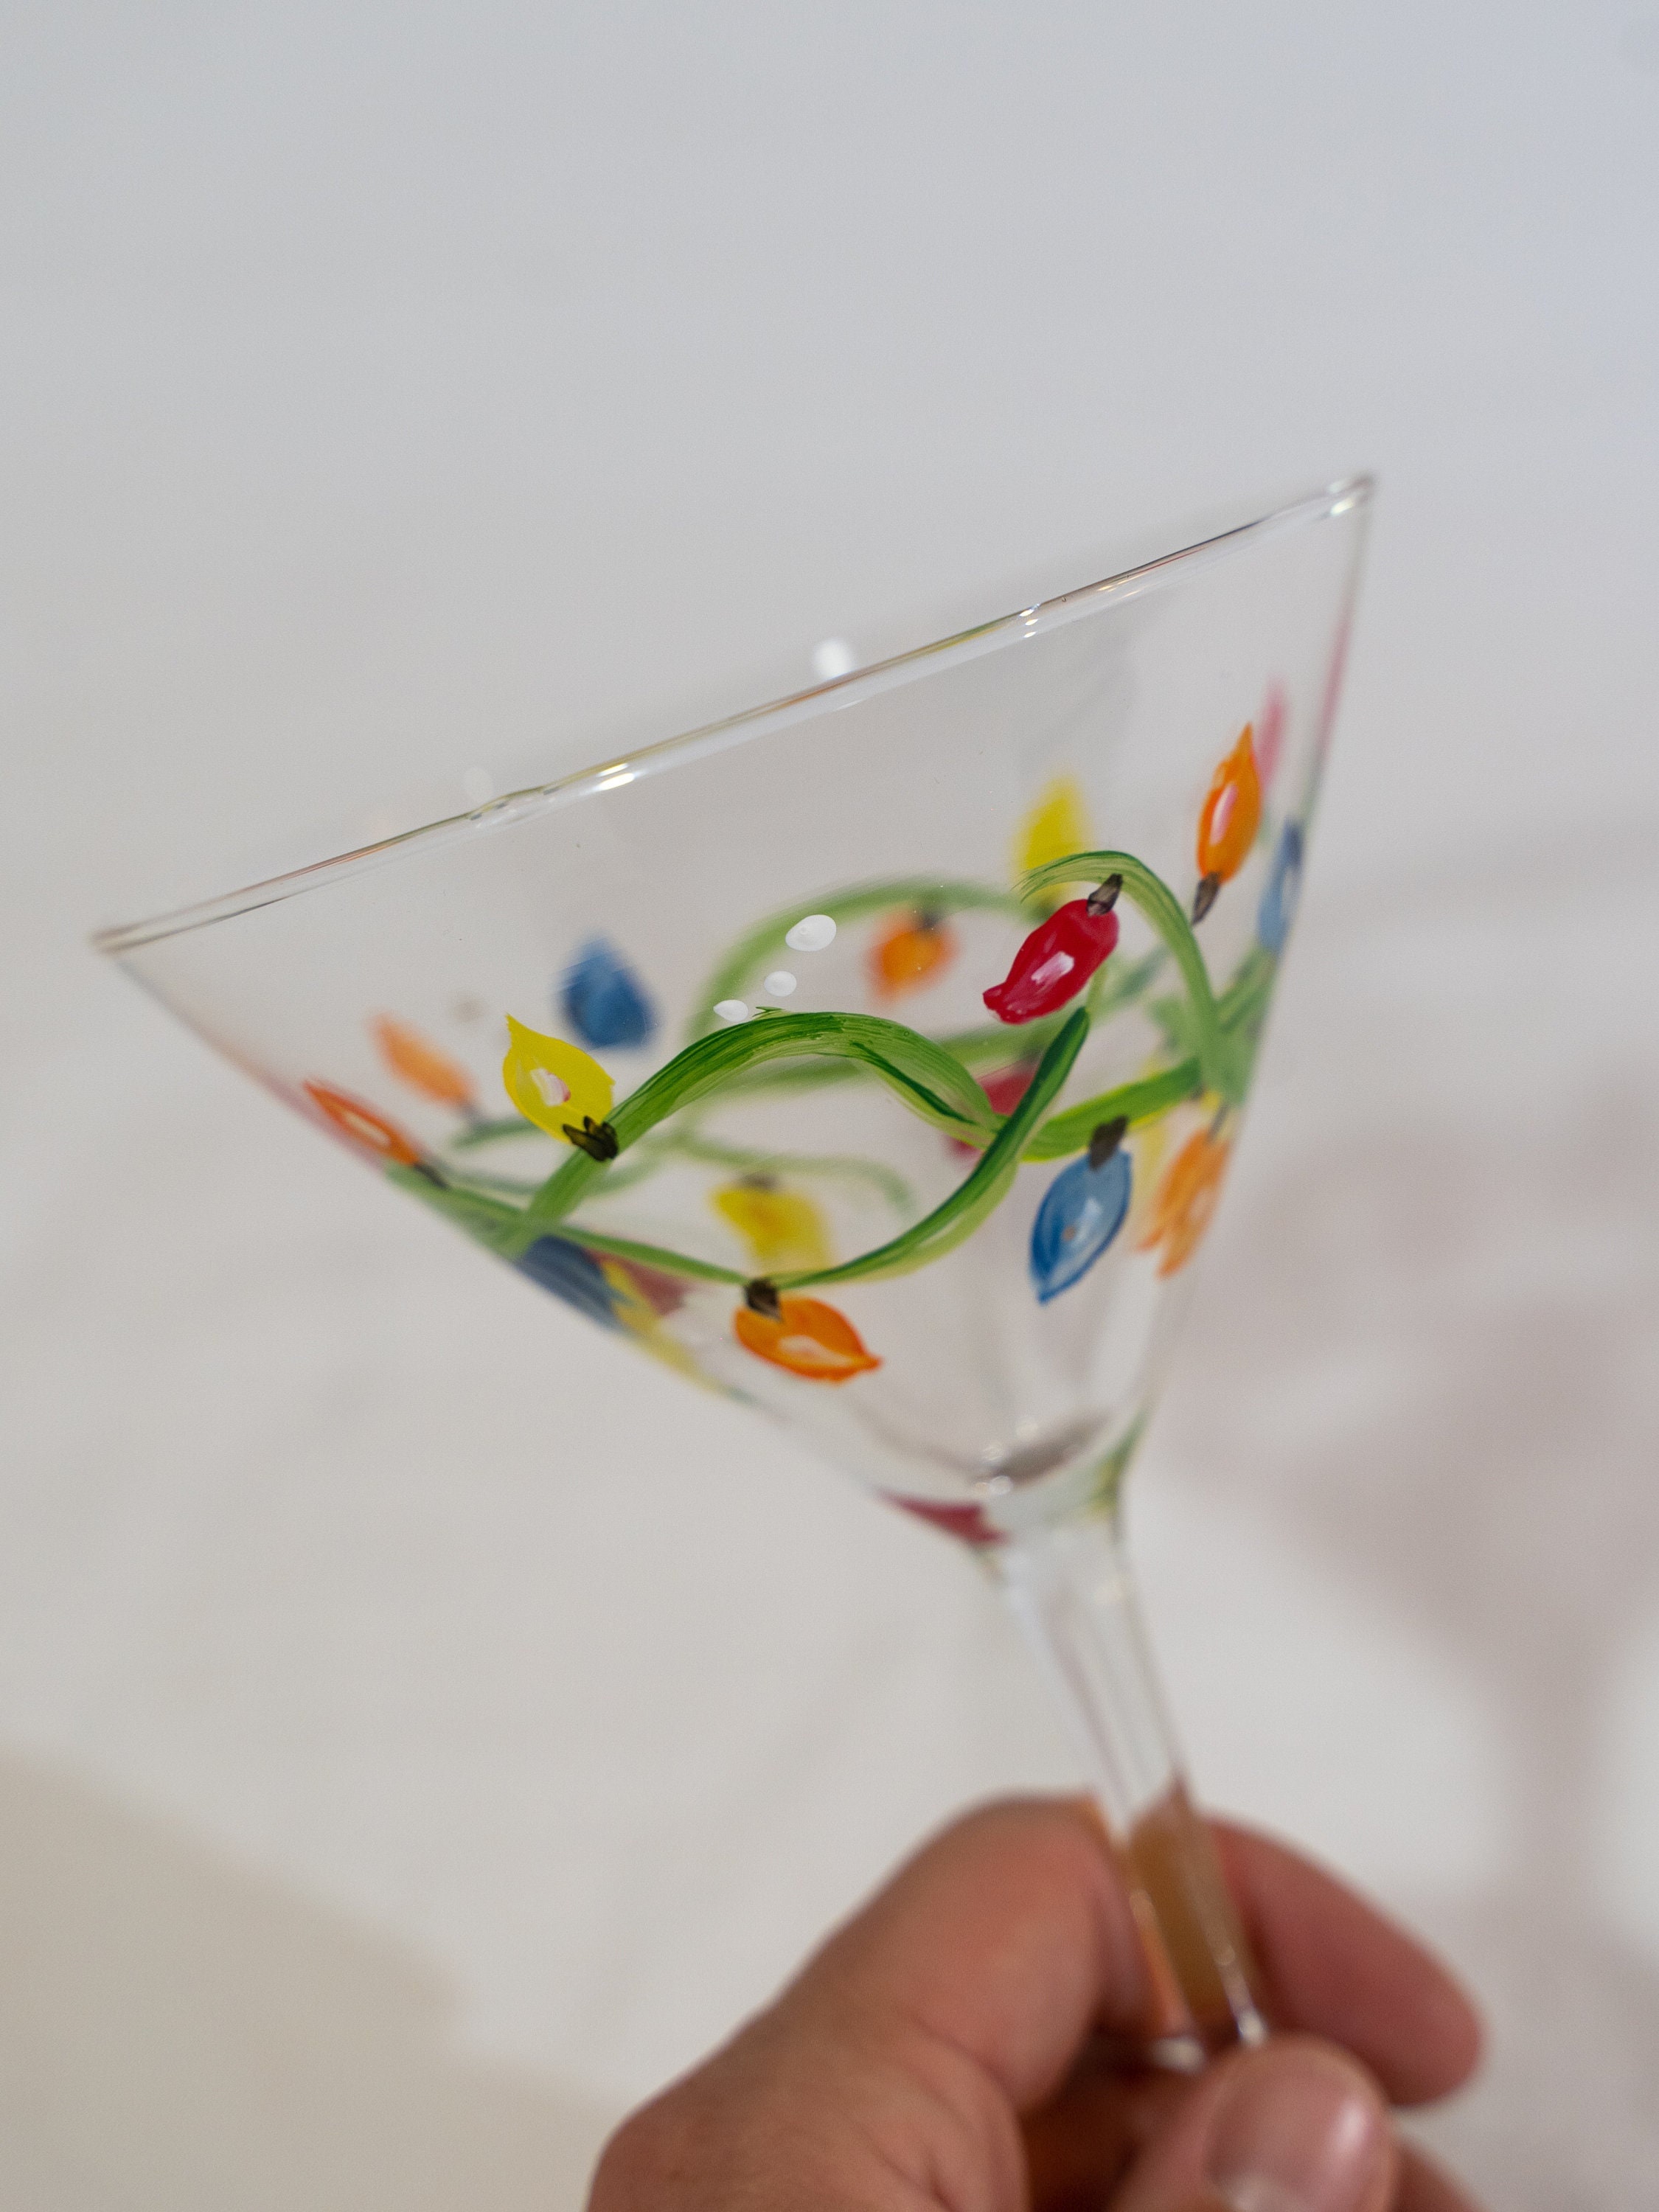 Wonderland 8.5oz Martini Cocktail Glass | Set of 4 | Rolf Glass